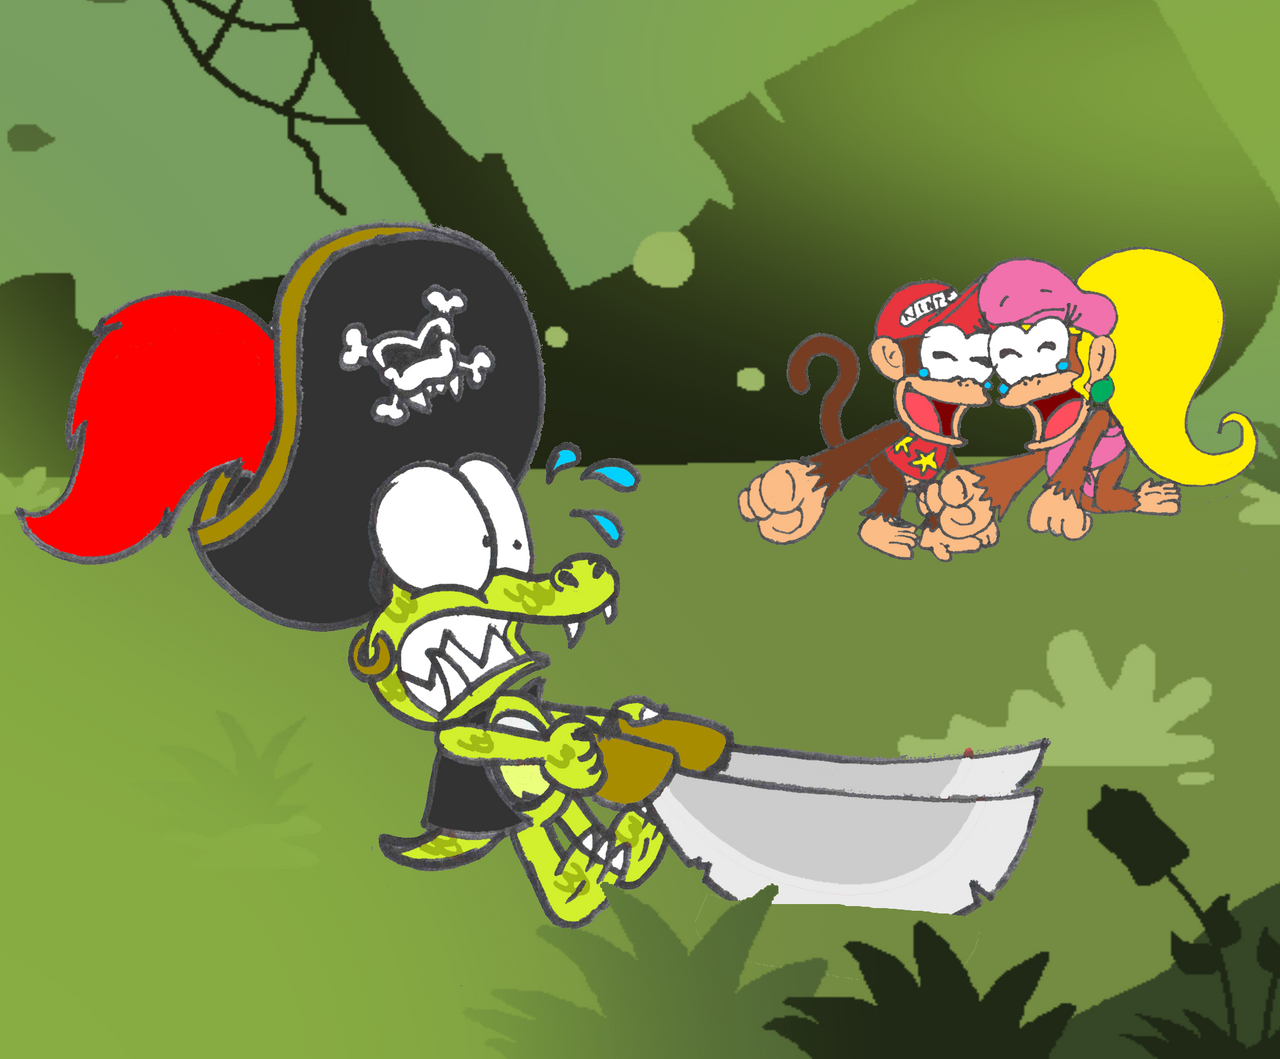 Pirate on the Run by WitchyGmod on DeviantArt